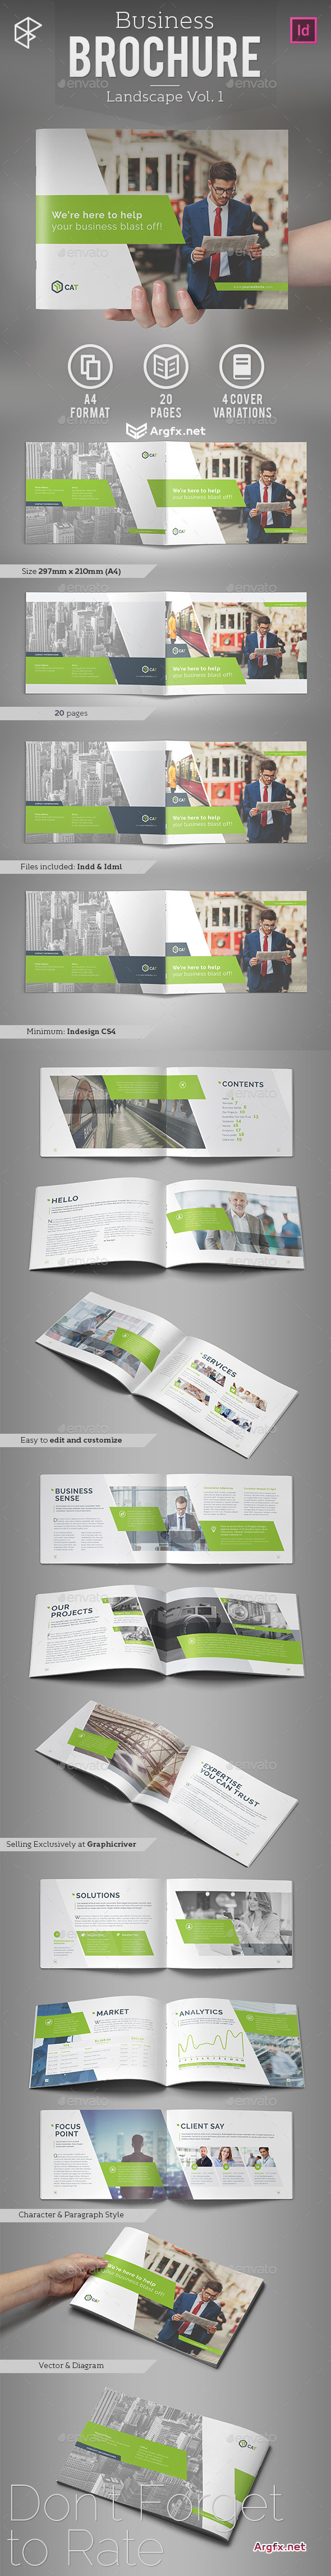  GraphicRiver - Business Brochure - Landscape Vol 1 14376917